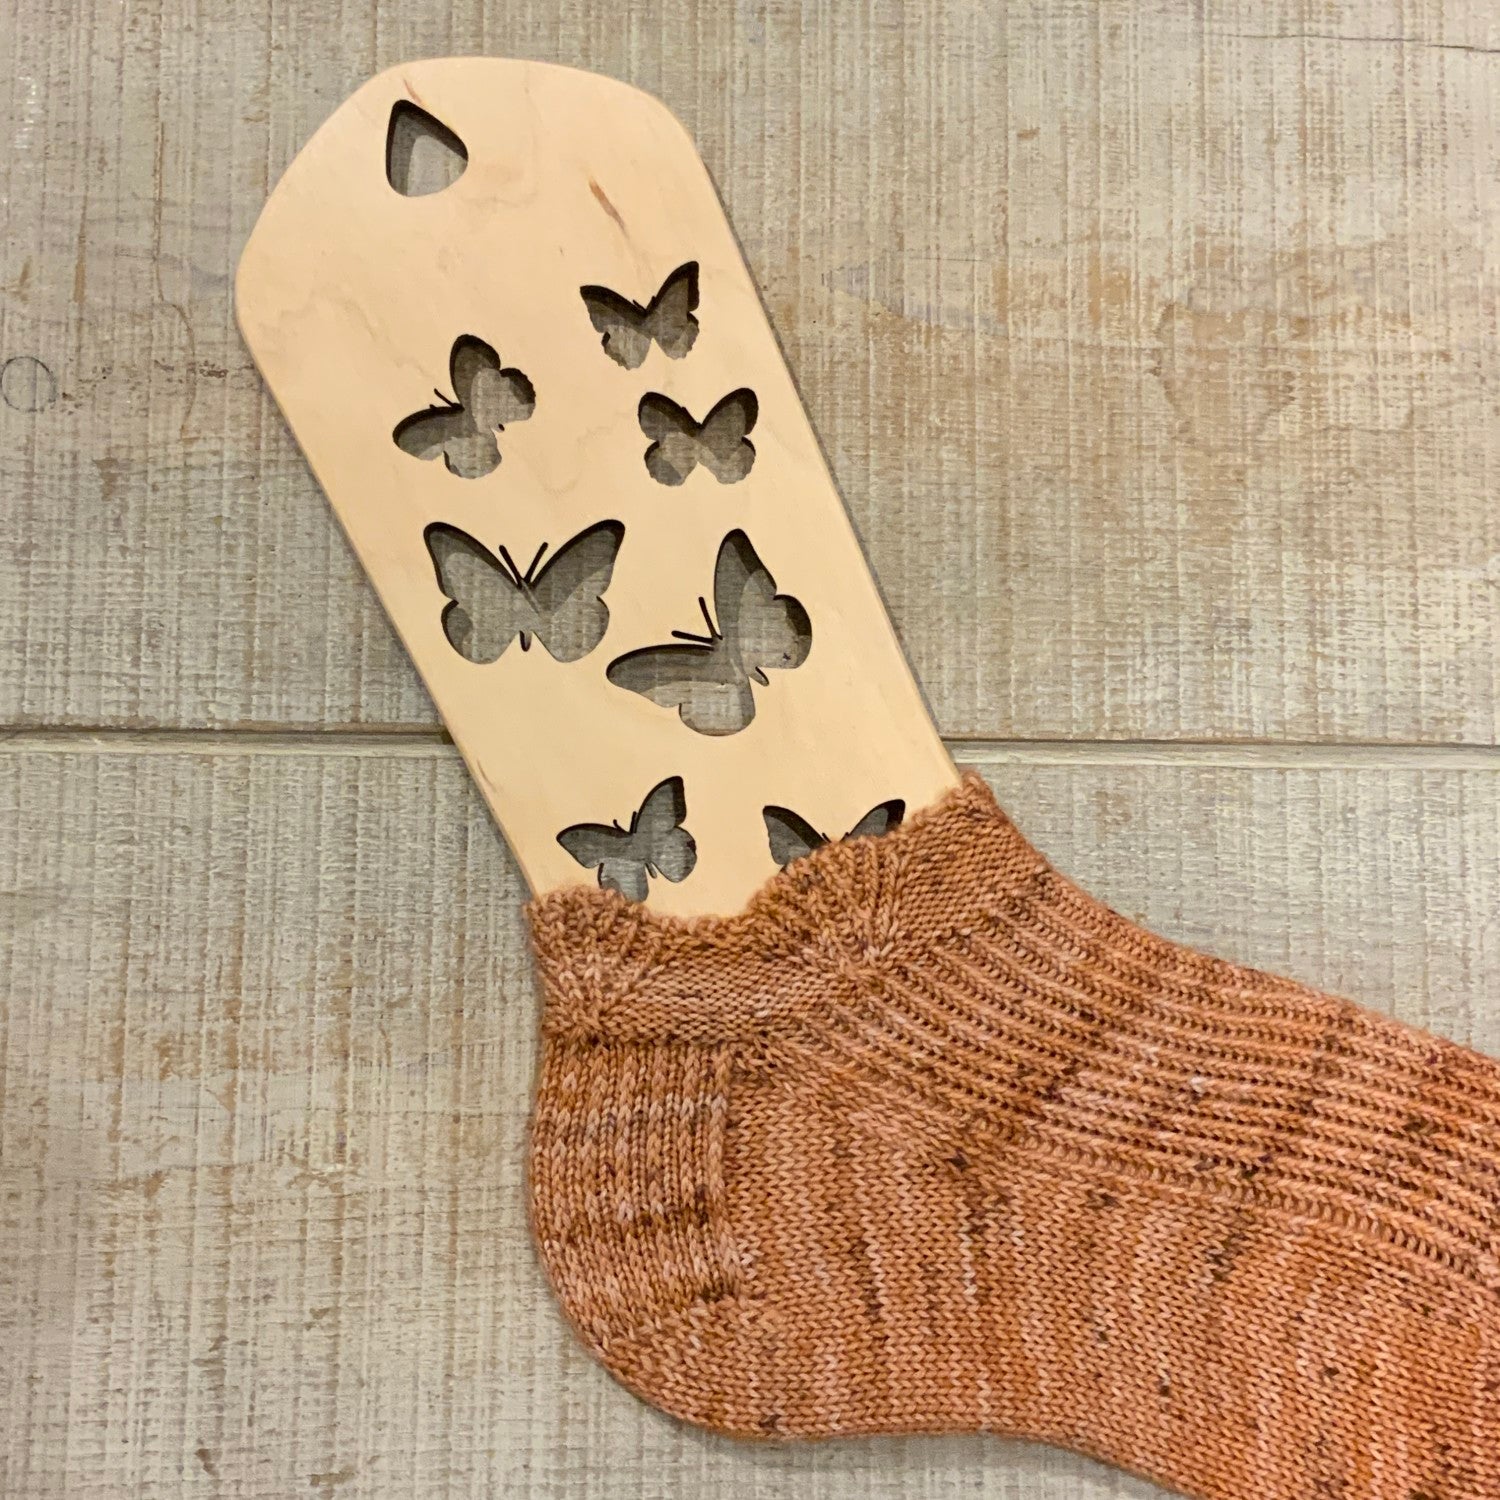 Sheep Wooden Sock Blockers pairknitting Form for Blocking 